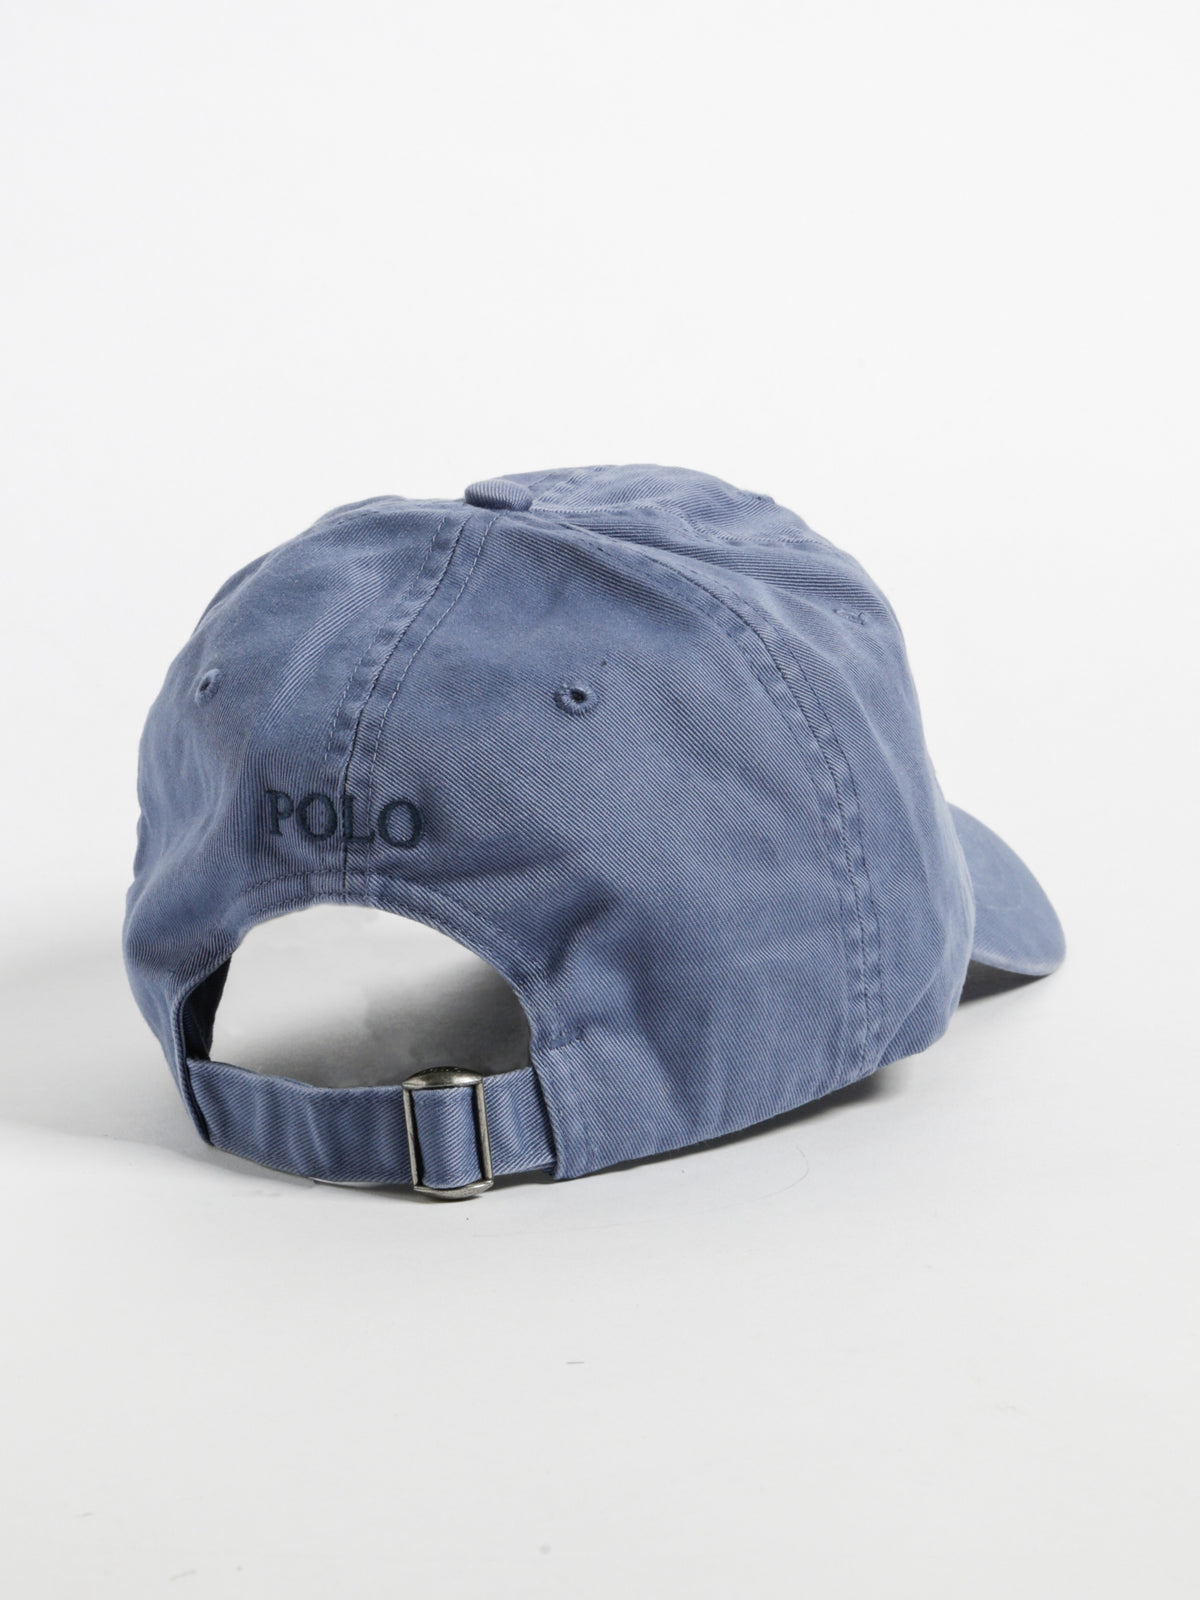 Polo Chino Baseball Cap in Carbon Blue